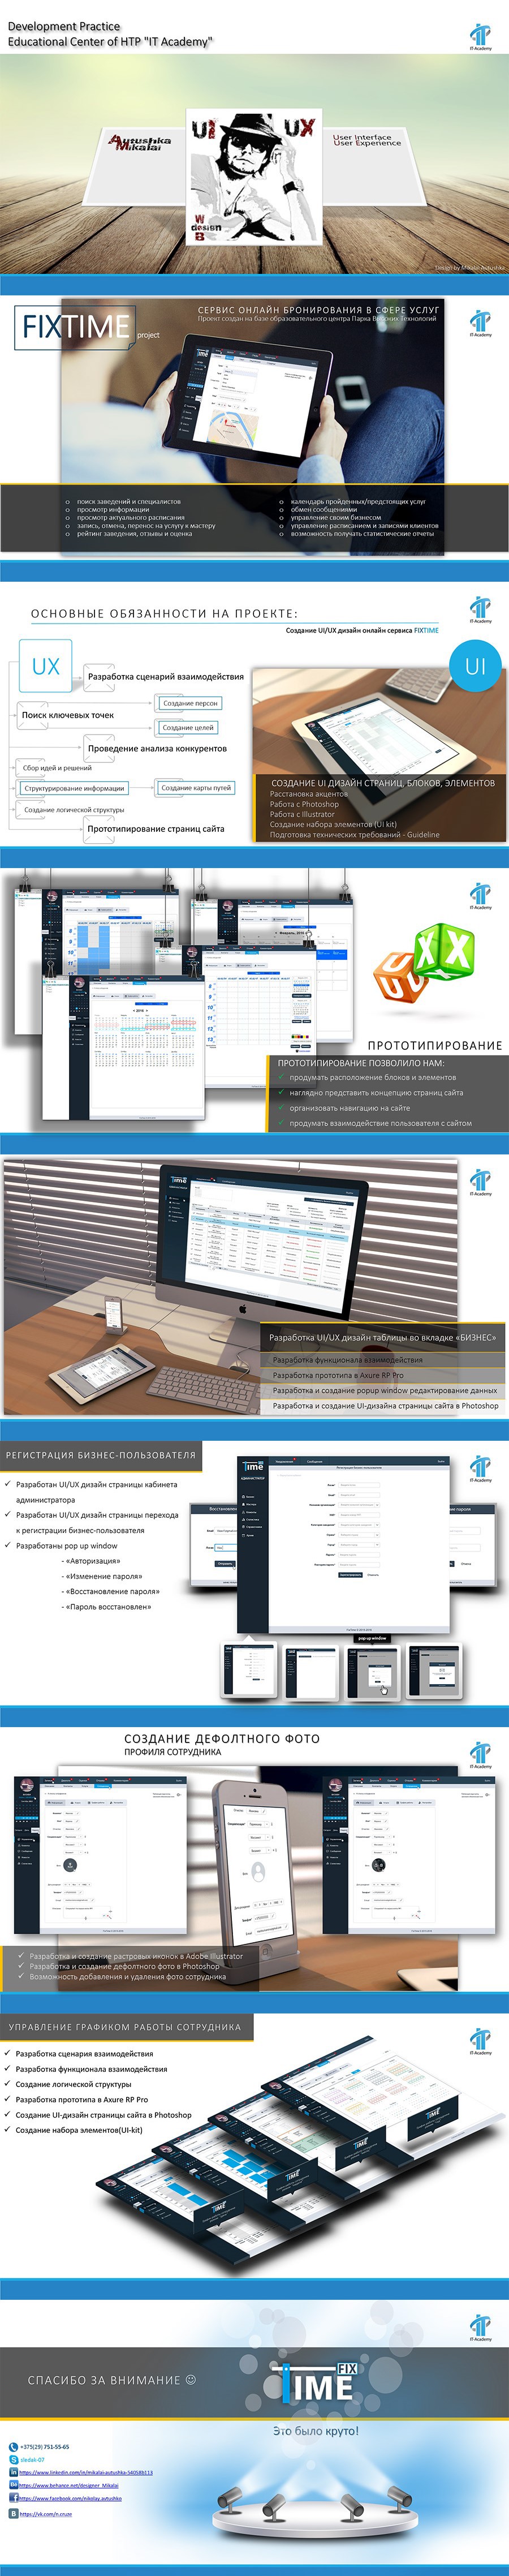 сервис онлайн бронировани услуги дизайн Прототип UI ux Web designe site online service Booking Prototiping